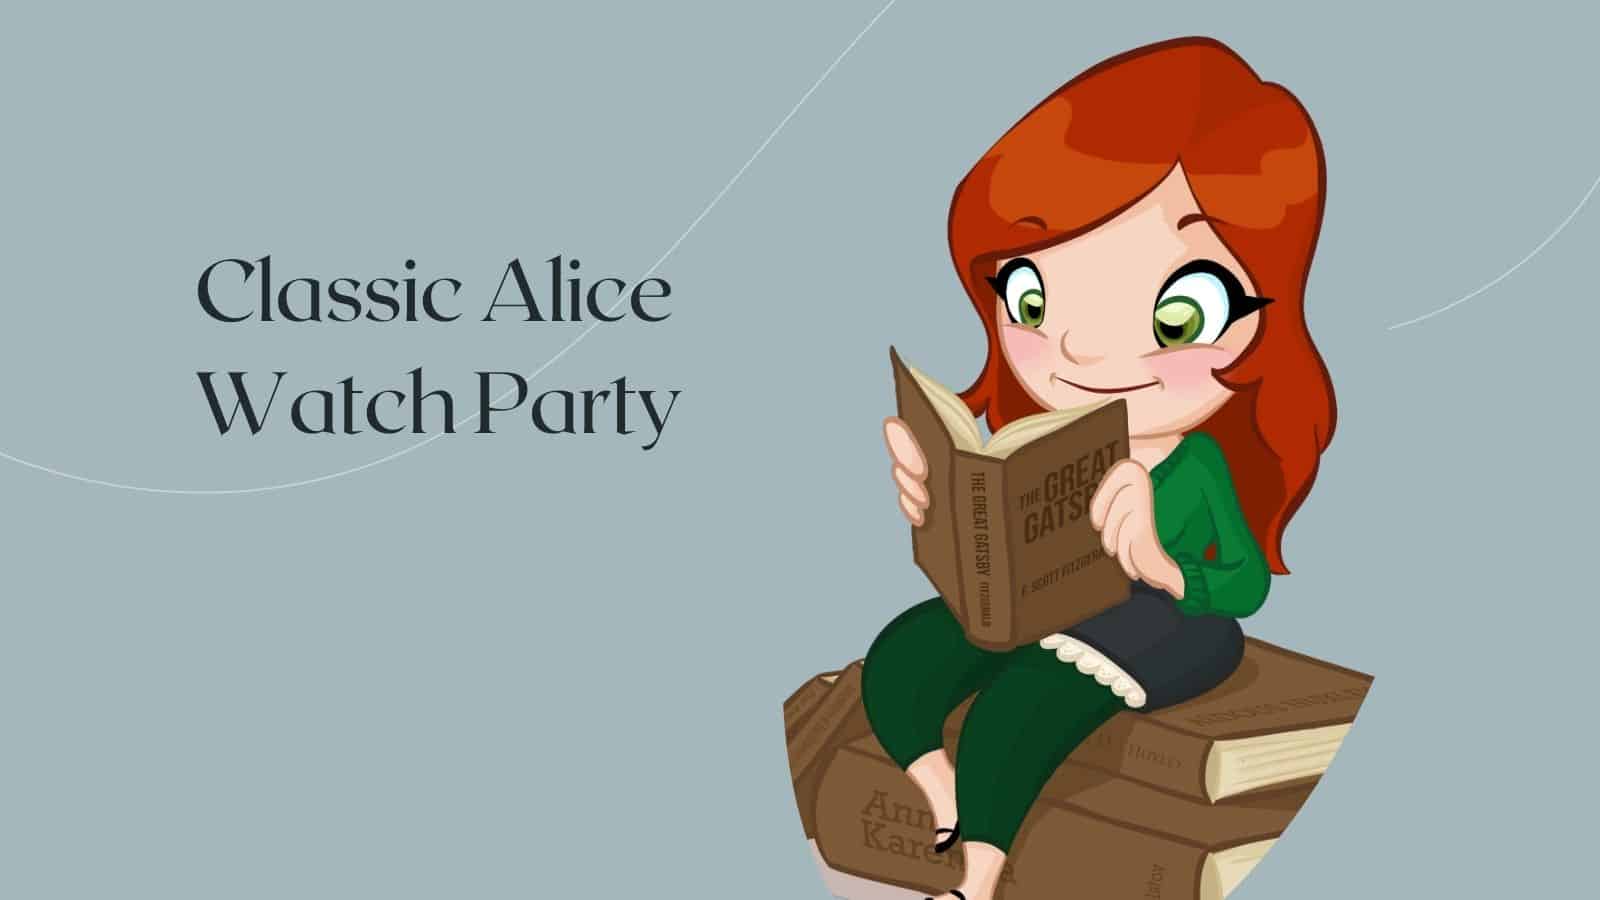 Classic Alice Watches: Macbeth